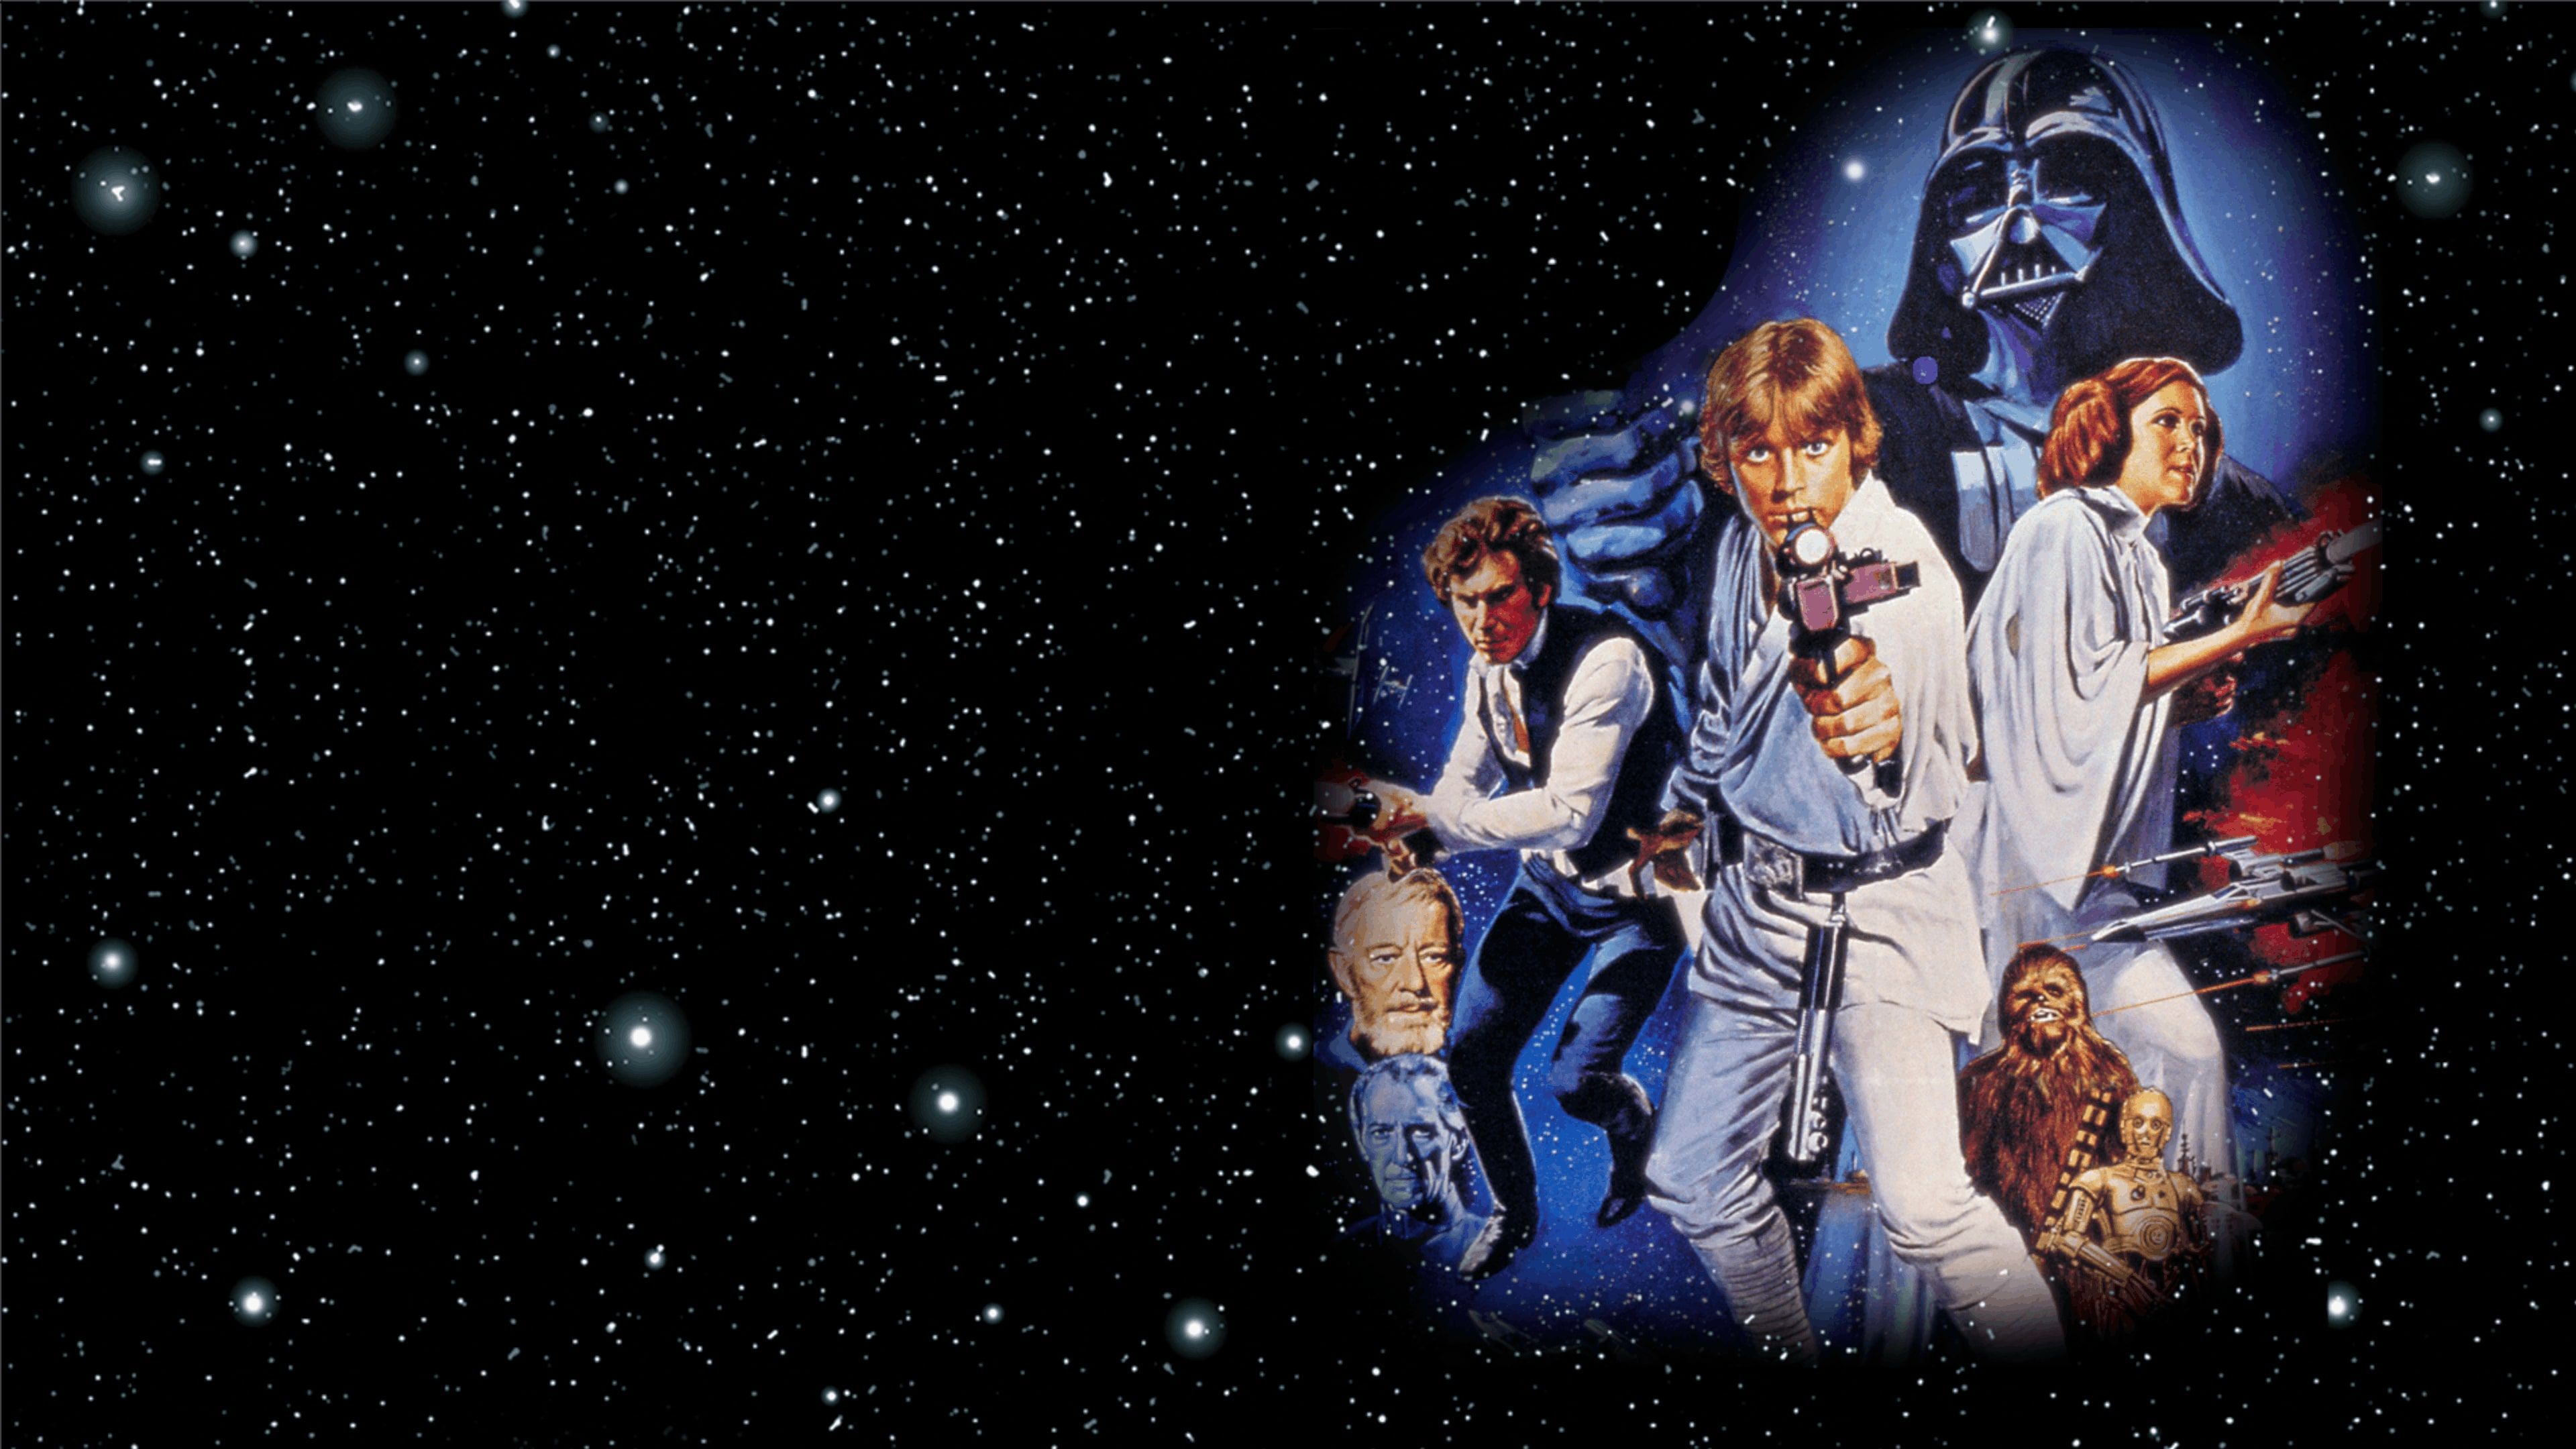 Super Star Wars cover image